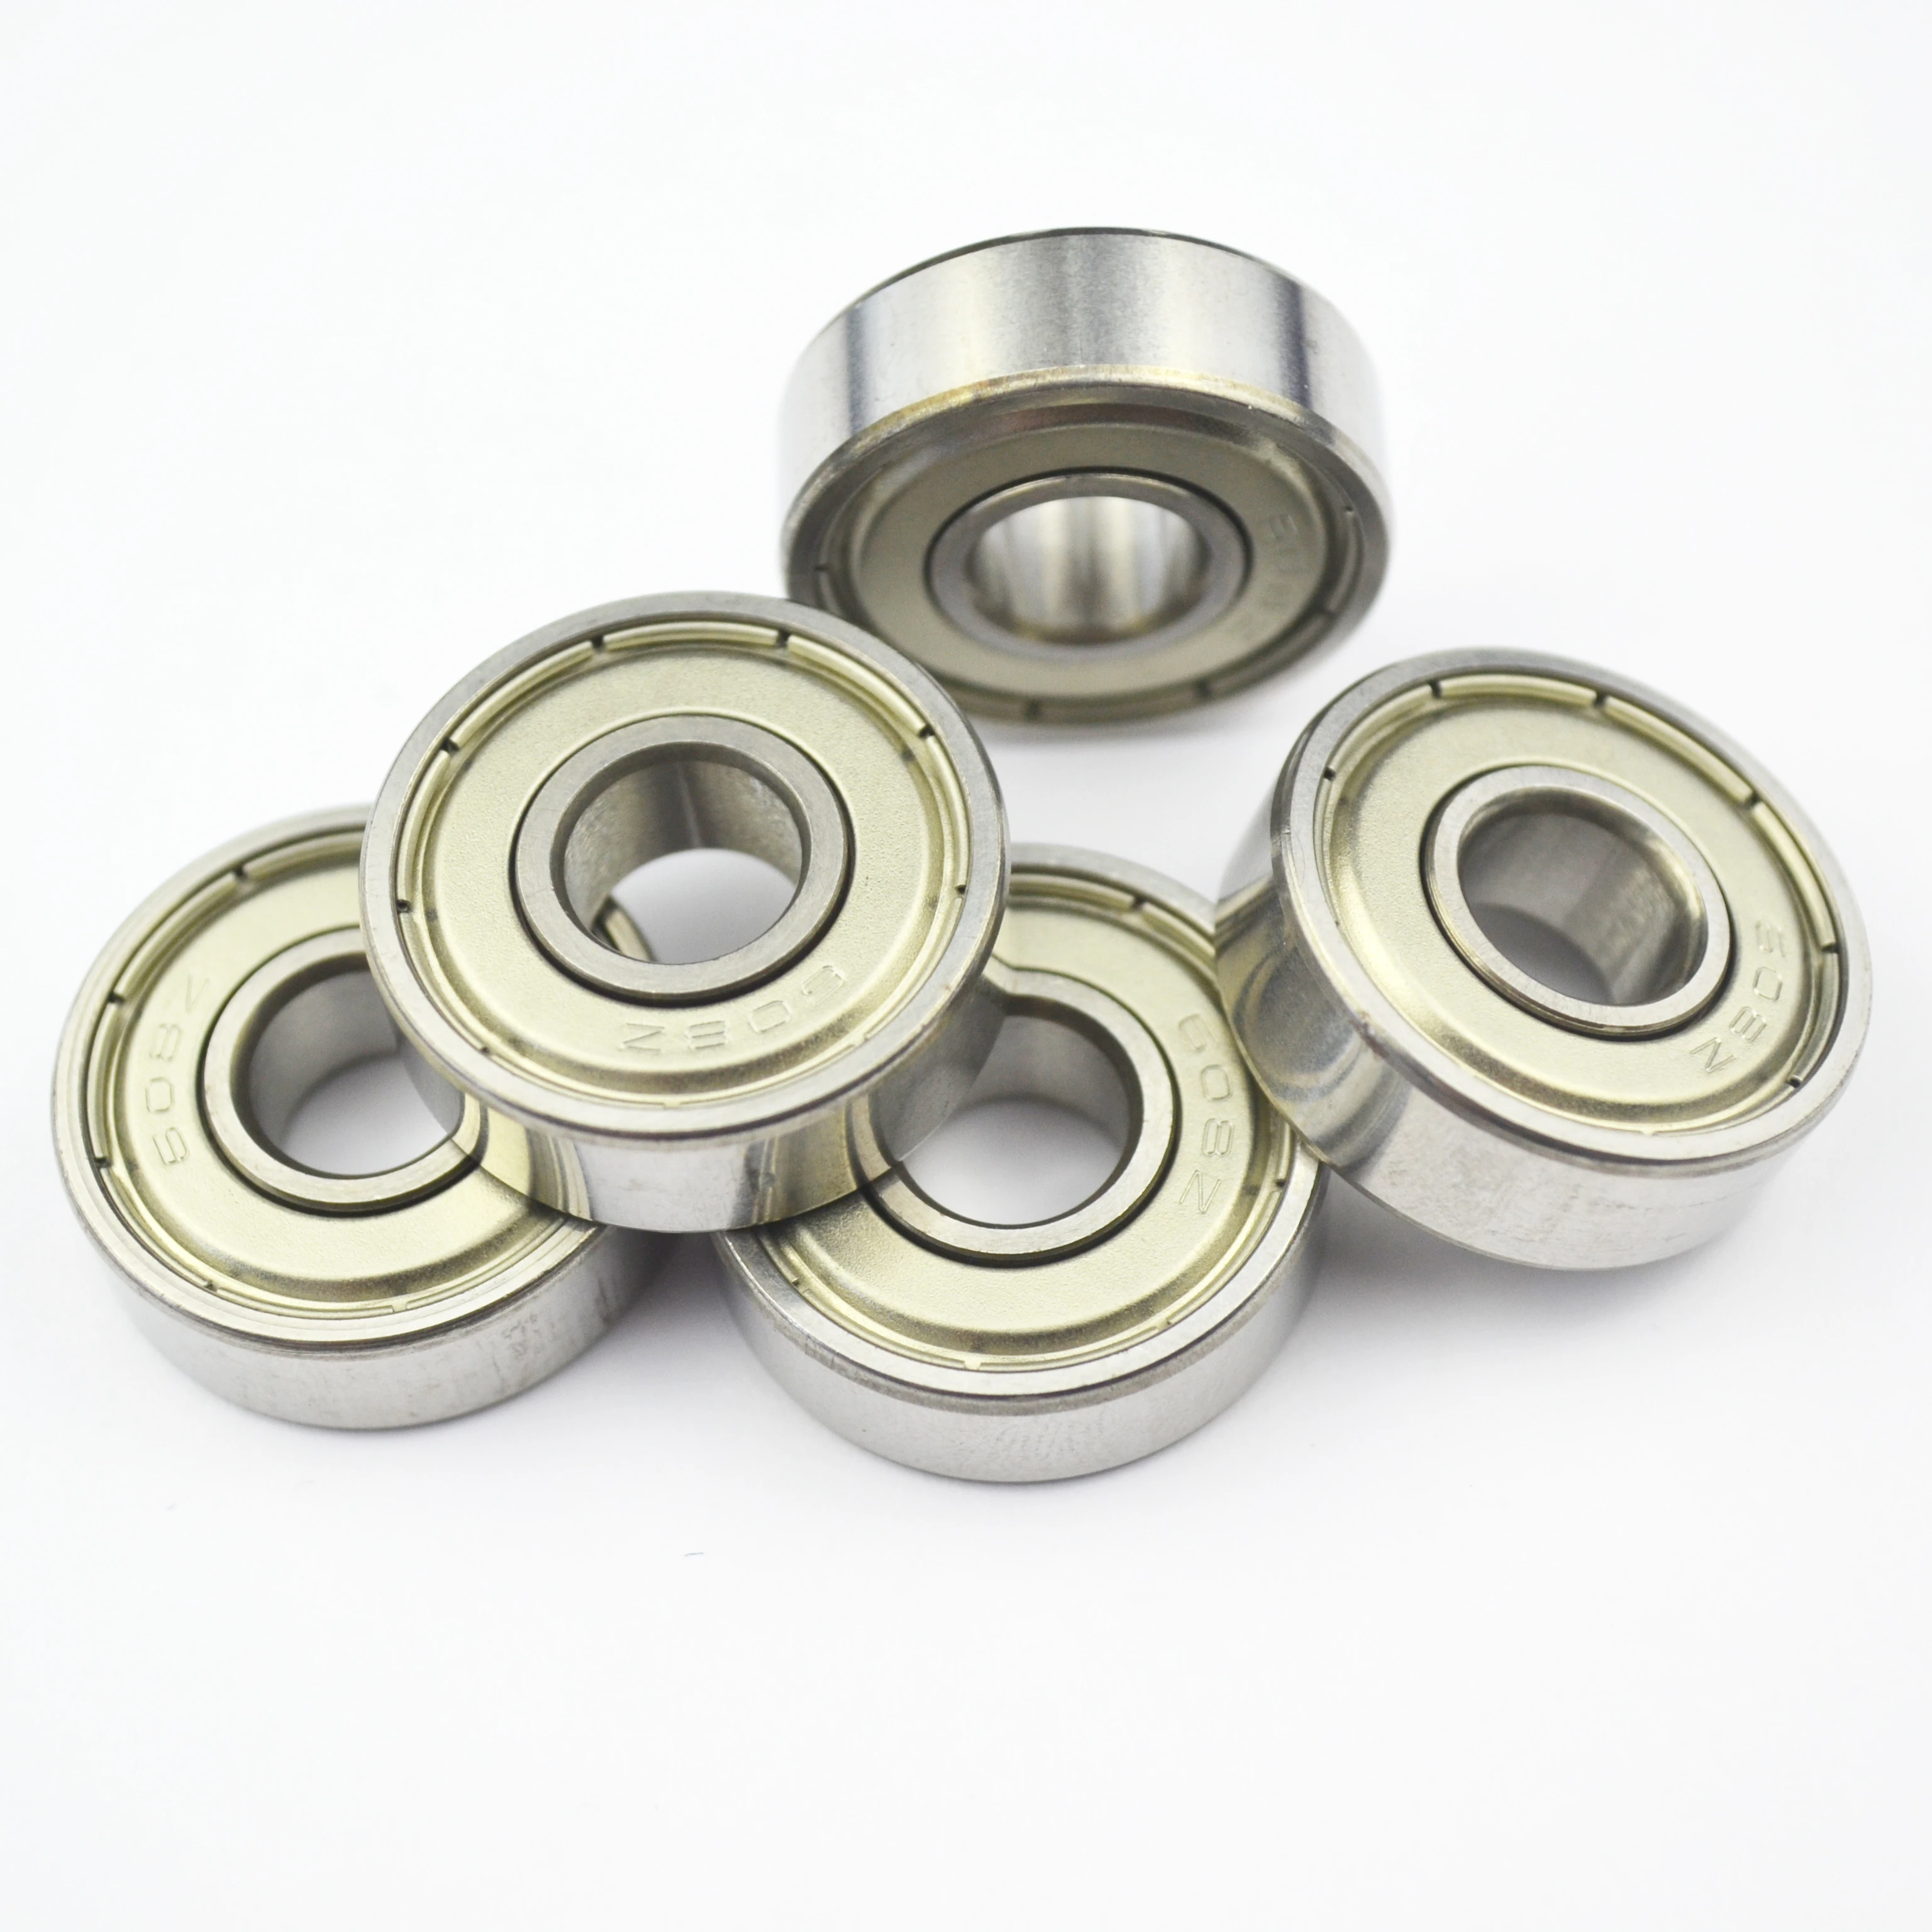 Stainless steel bearings deep groove ball bearing S697zz S698zz S693zz S694zz S695zz S699zz 2Z 2rs s697 S698 S698-2RS